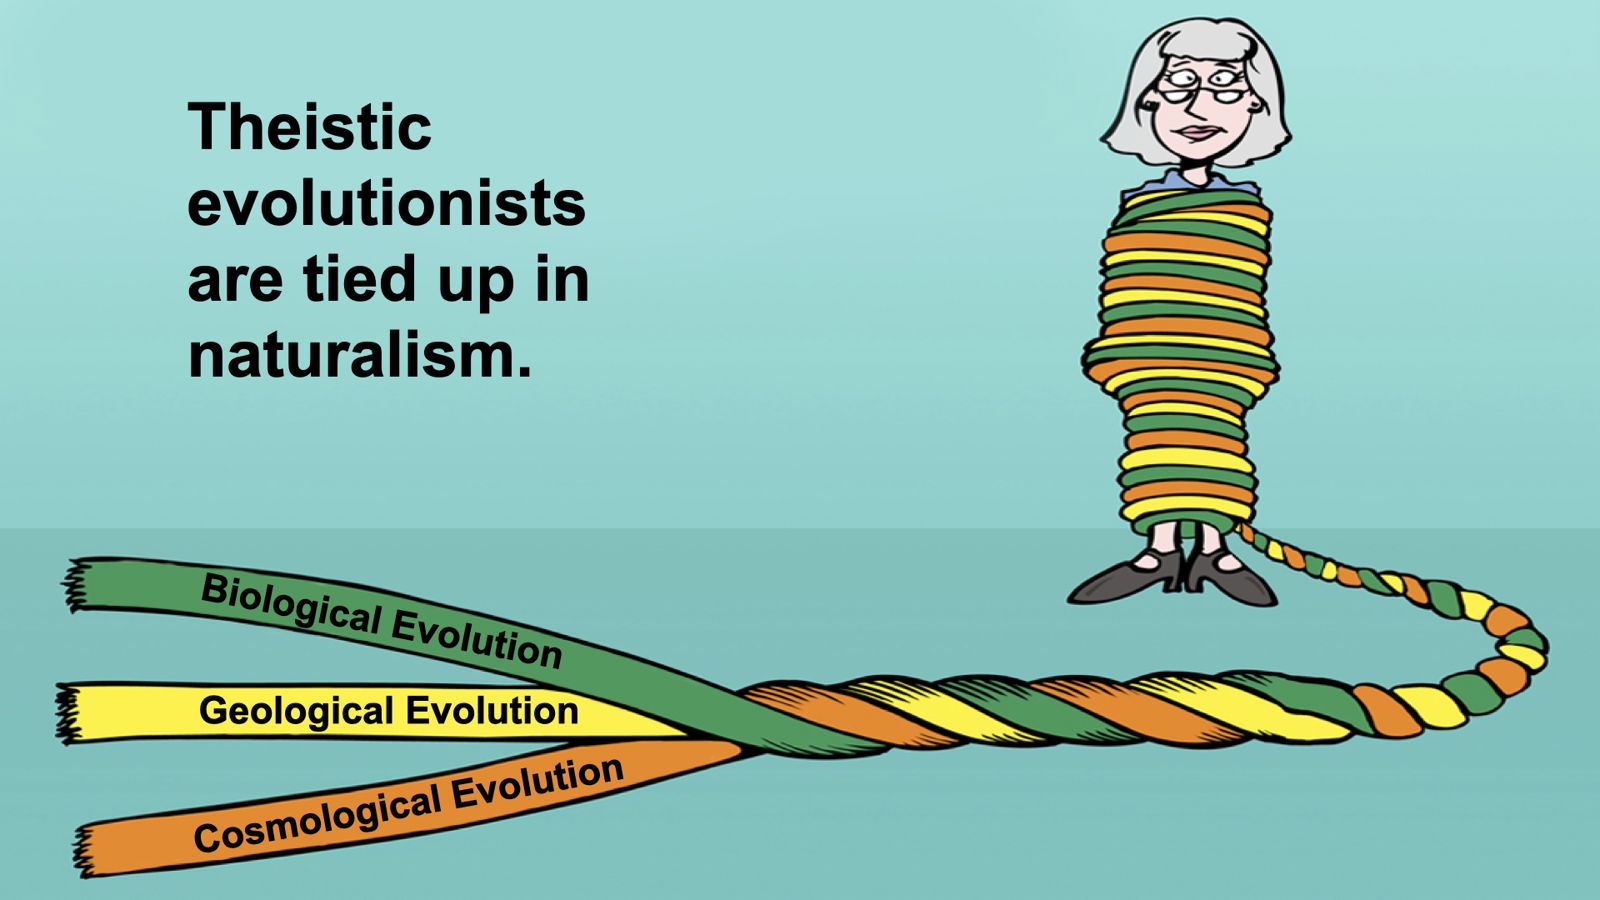 Theistic evolutionists